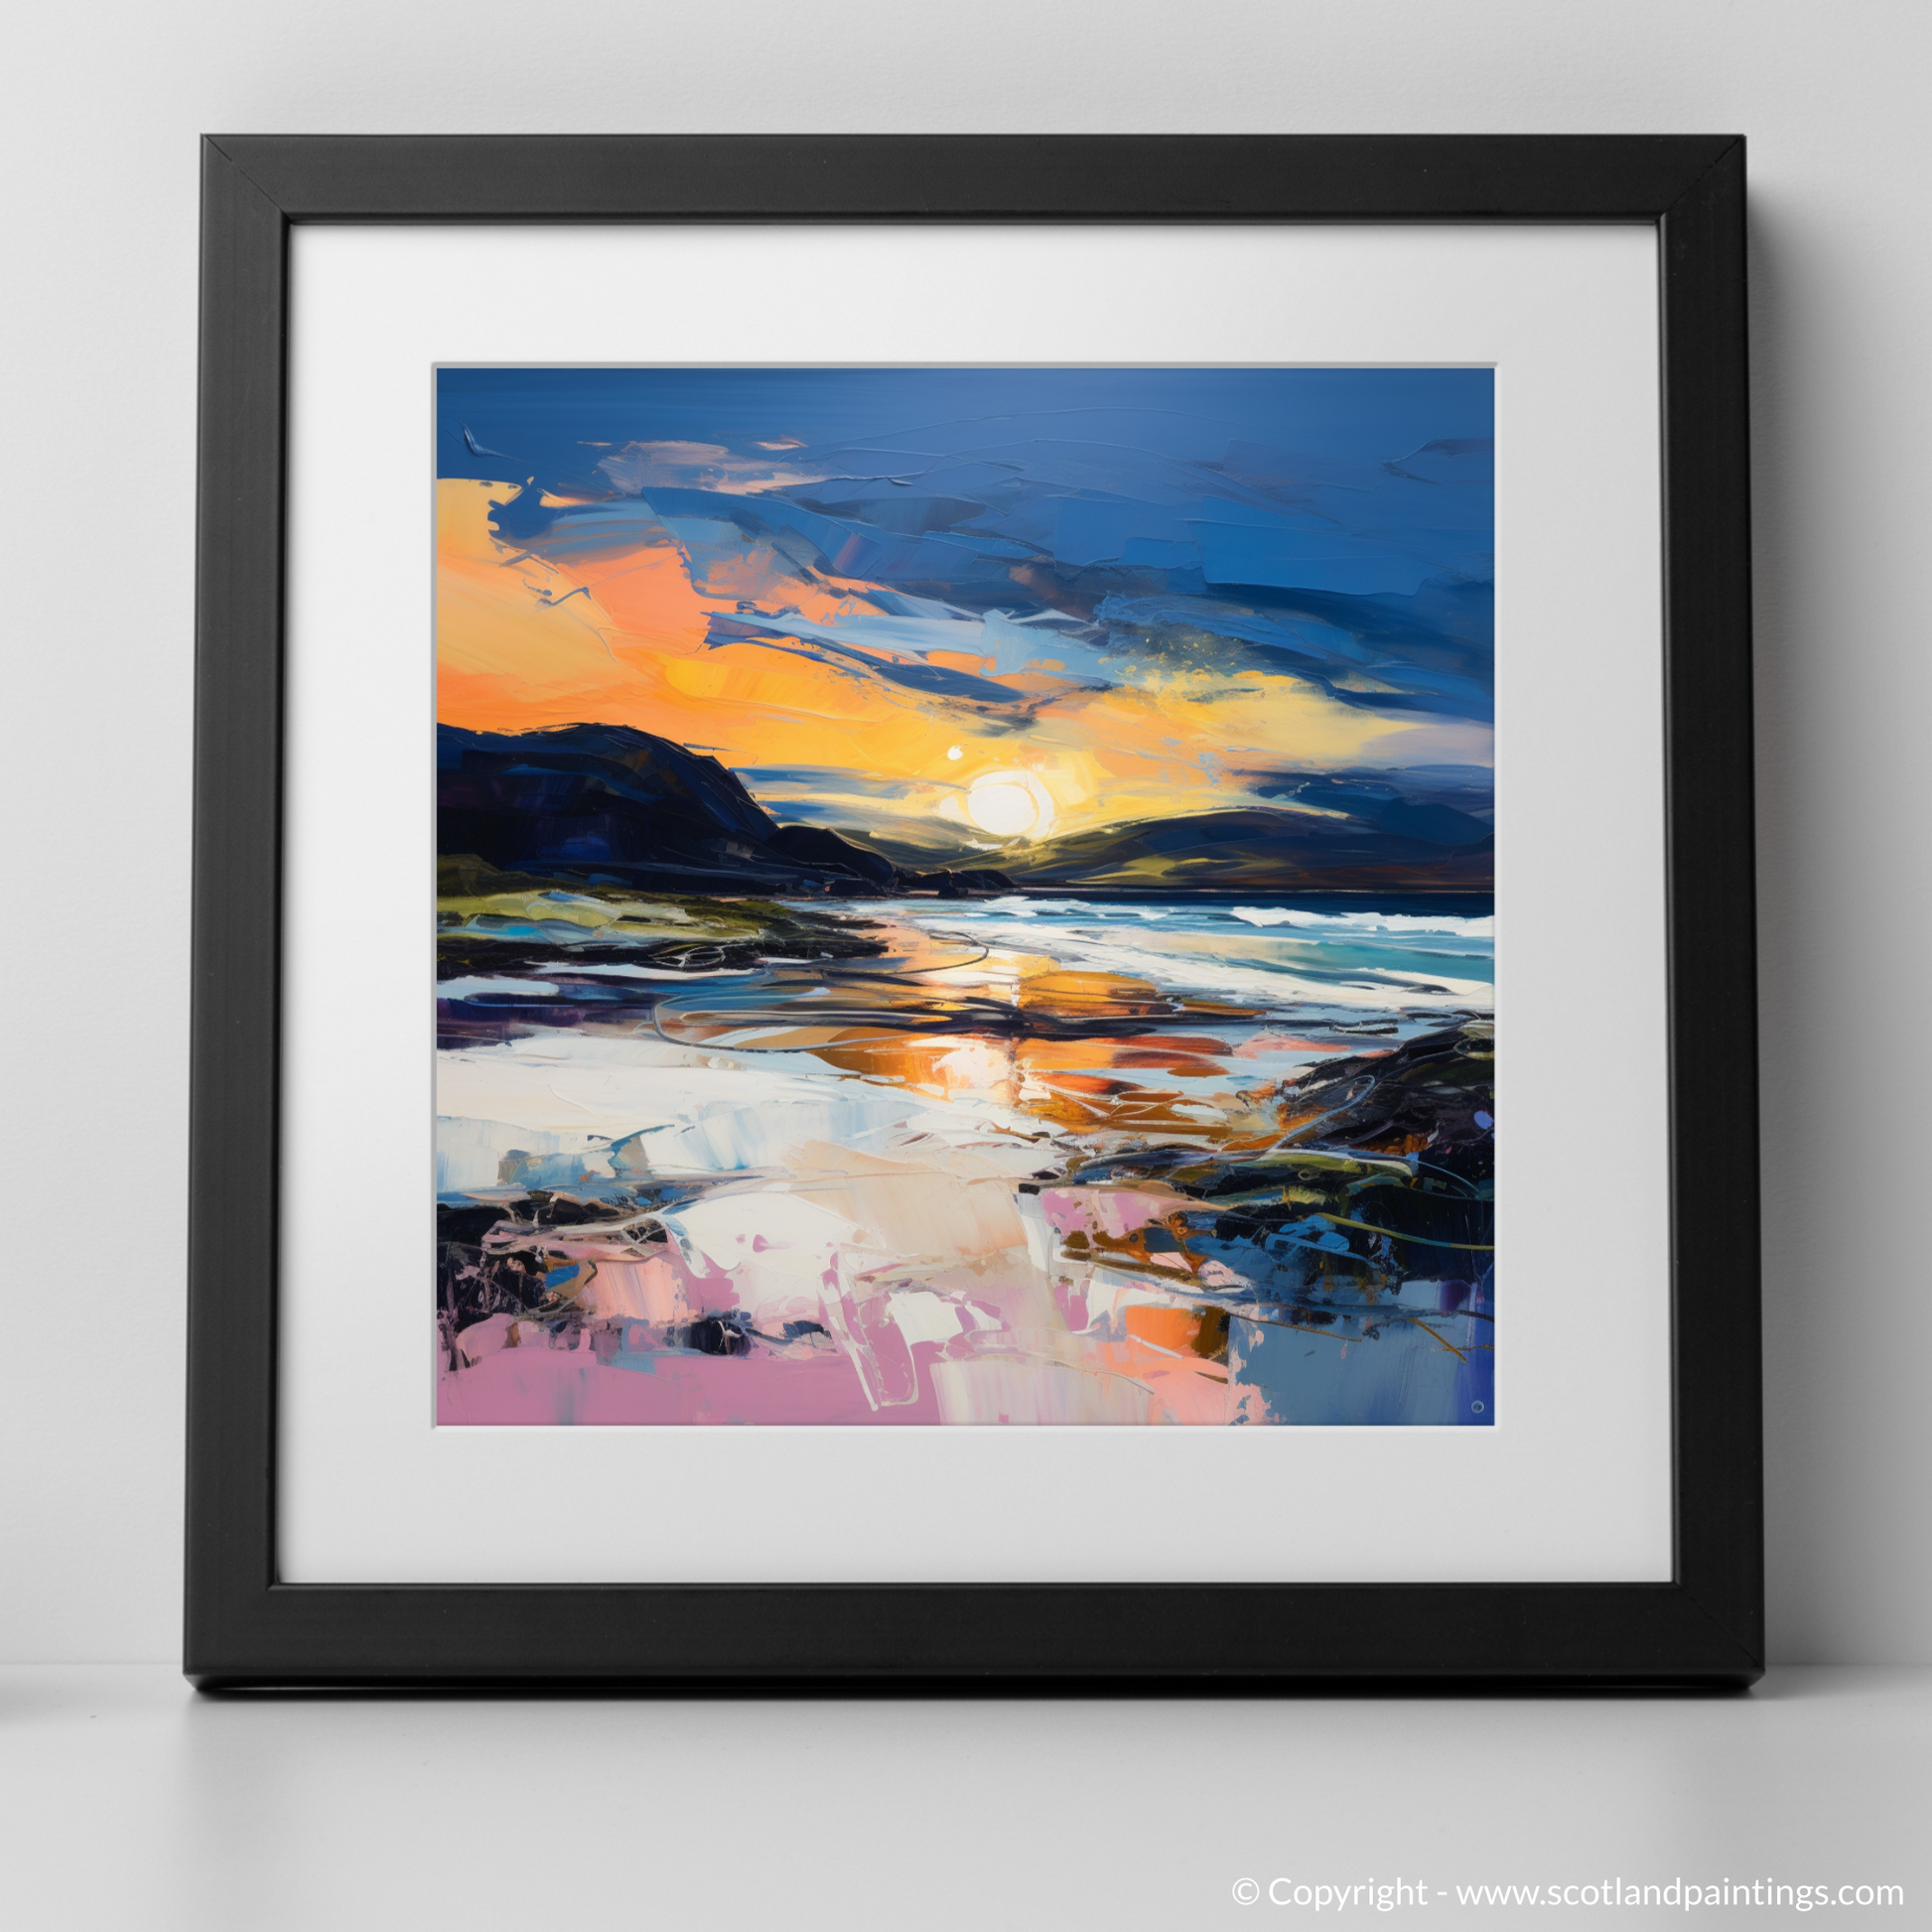 Art Print of Scarista Beach at dusk with a black frame